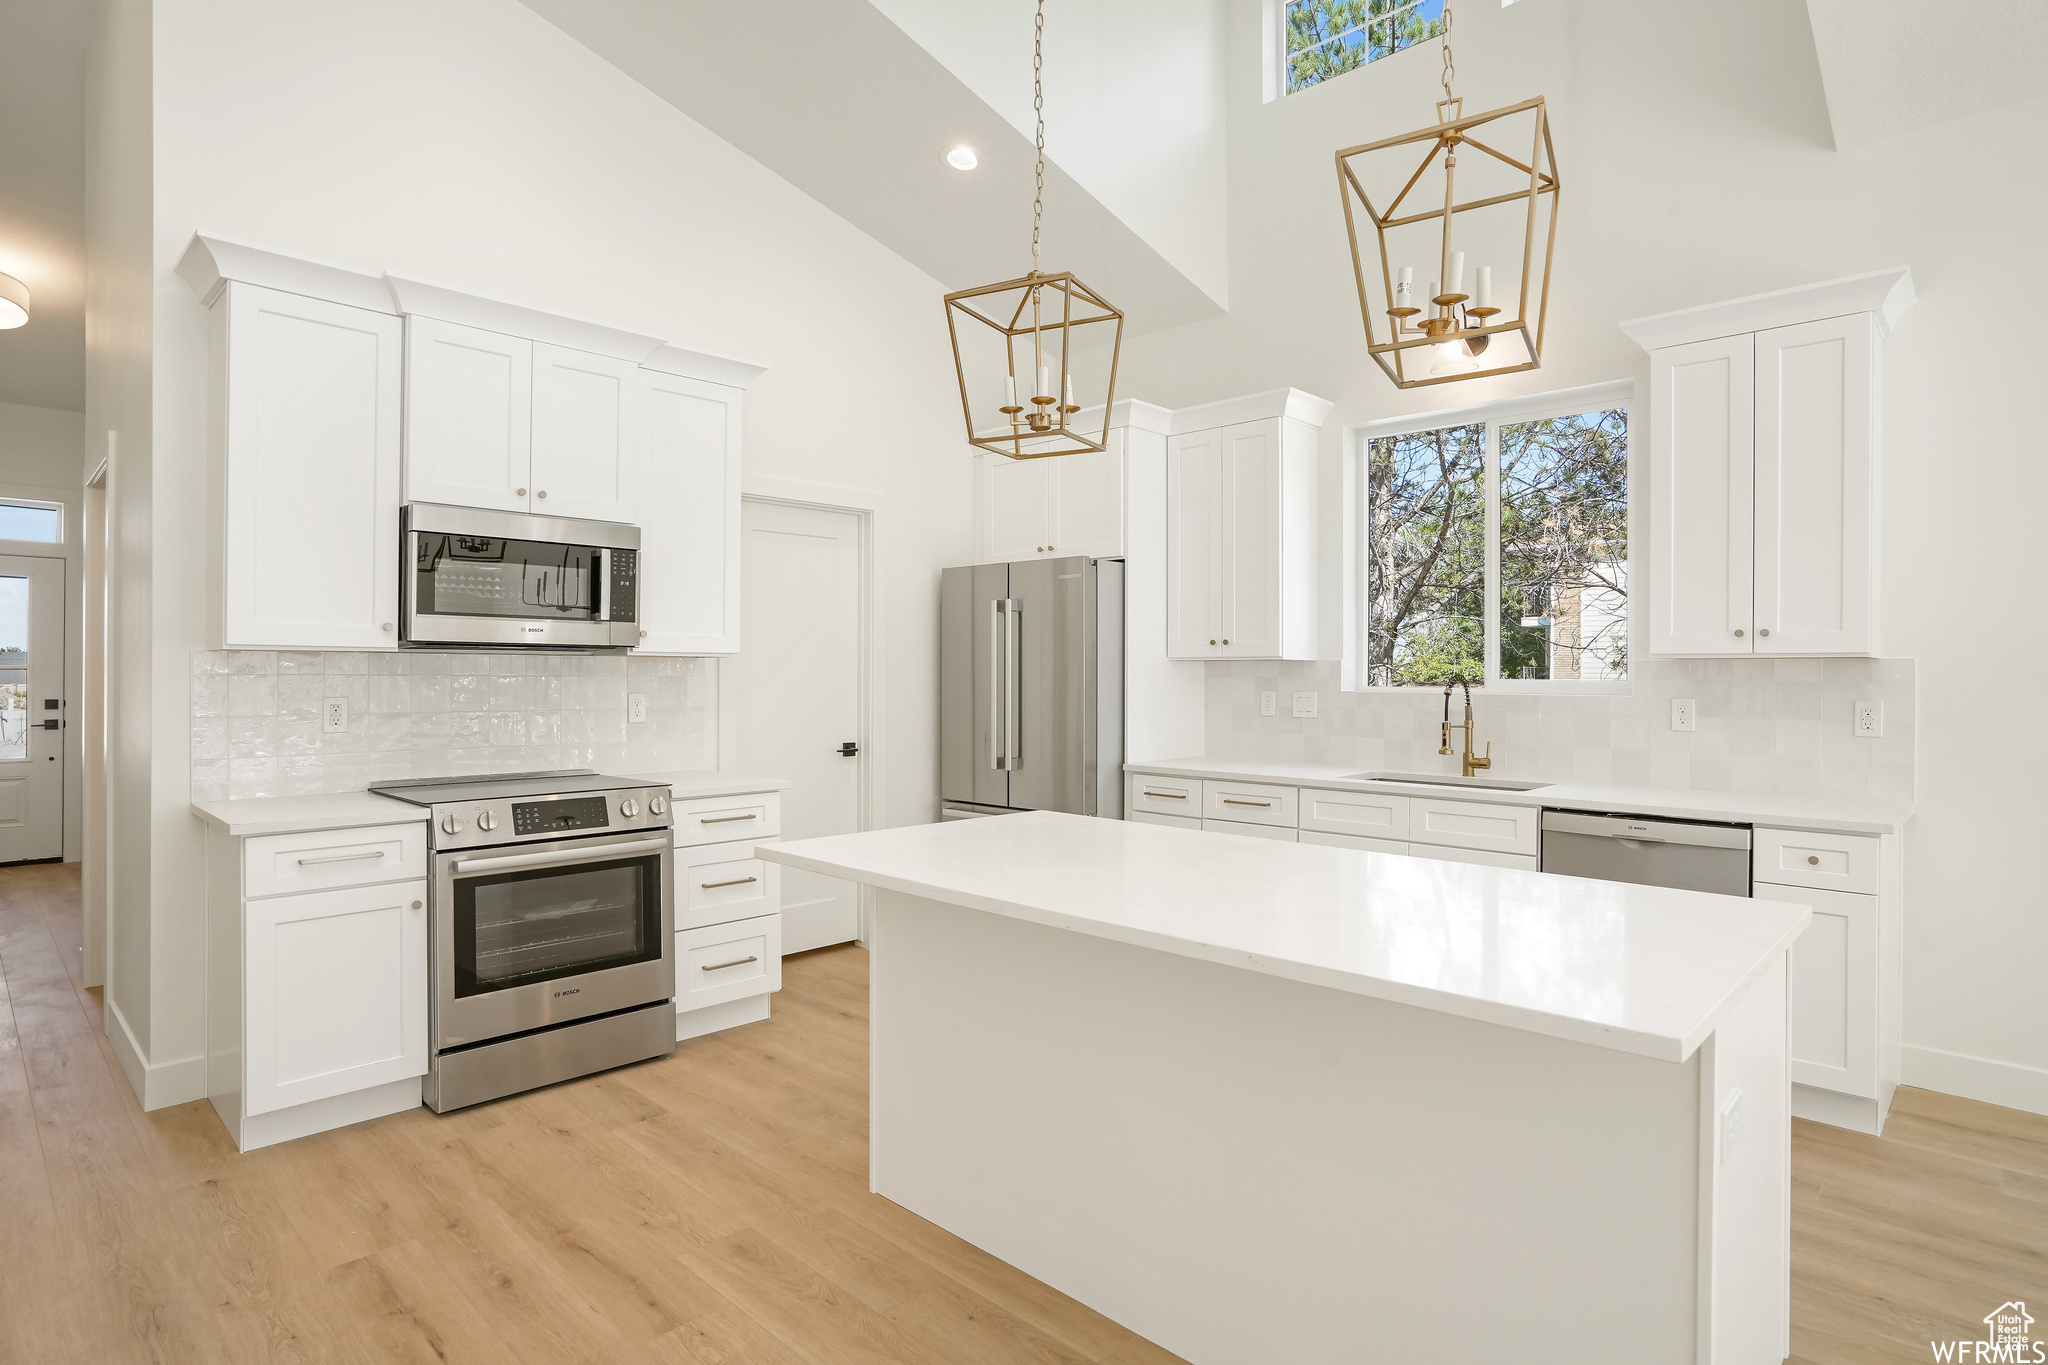 Kitchen with tasteful backsplash, white cabinets, stainless steel appliances, and a kitchen island